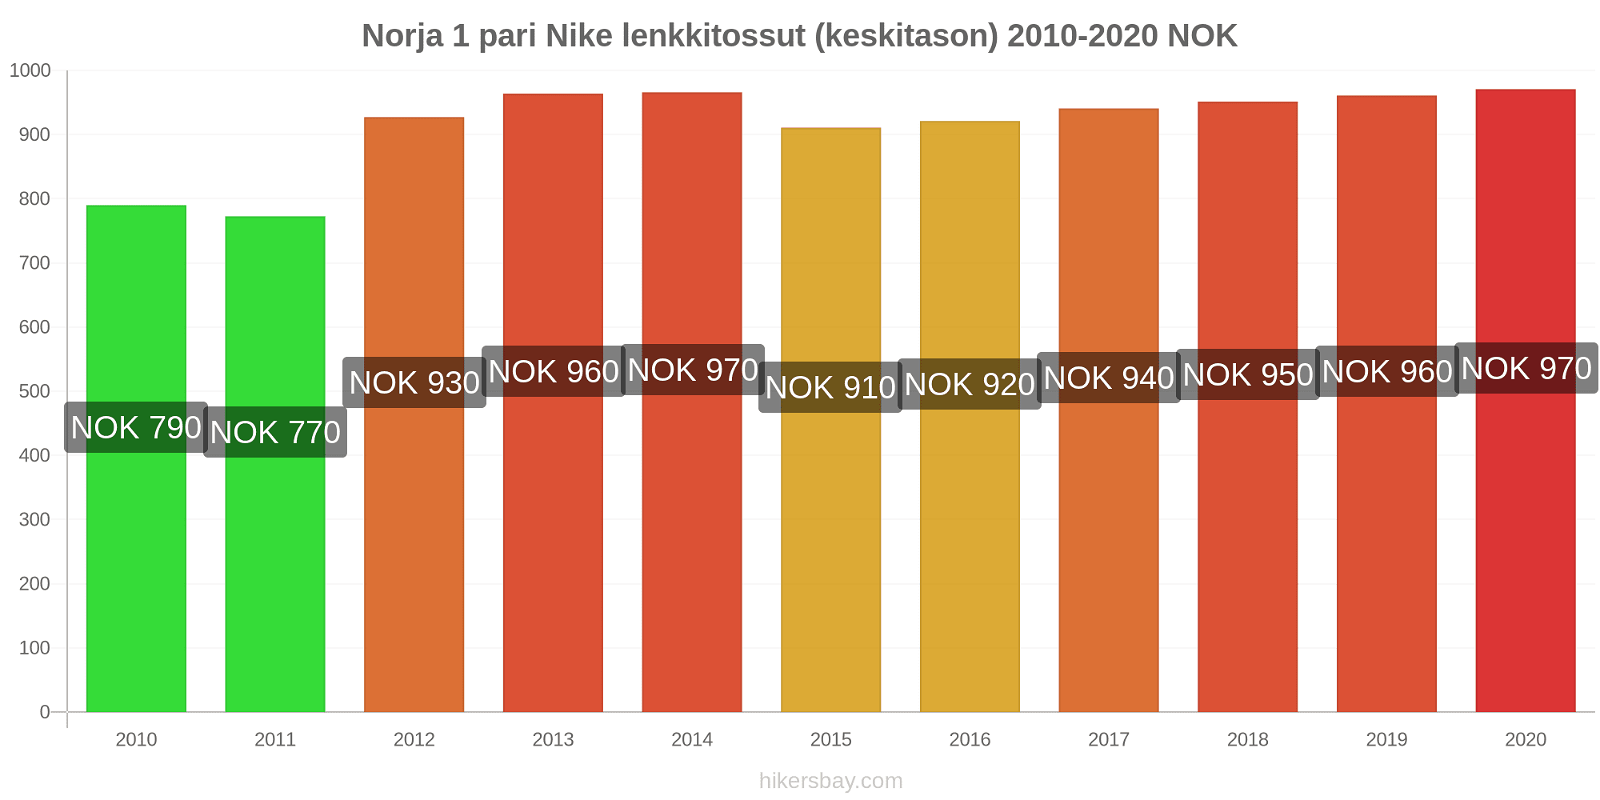 Norja hintojen muutokset 1 pari Nike lenkkitossut (keskitason) hikersbay.com